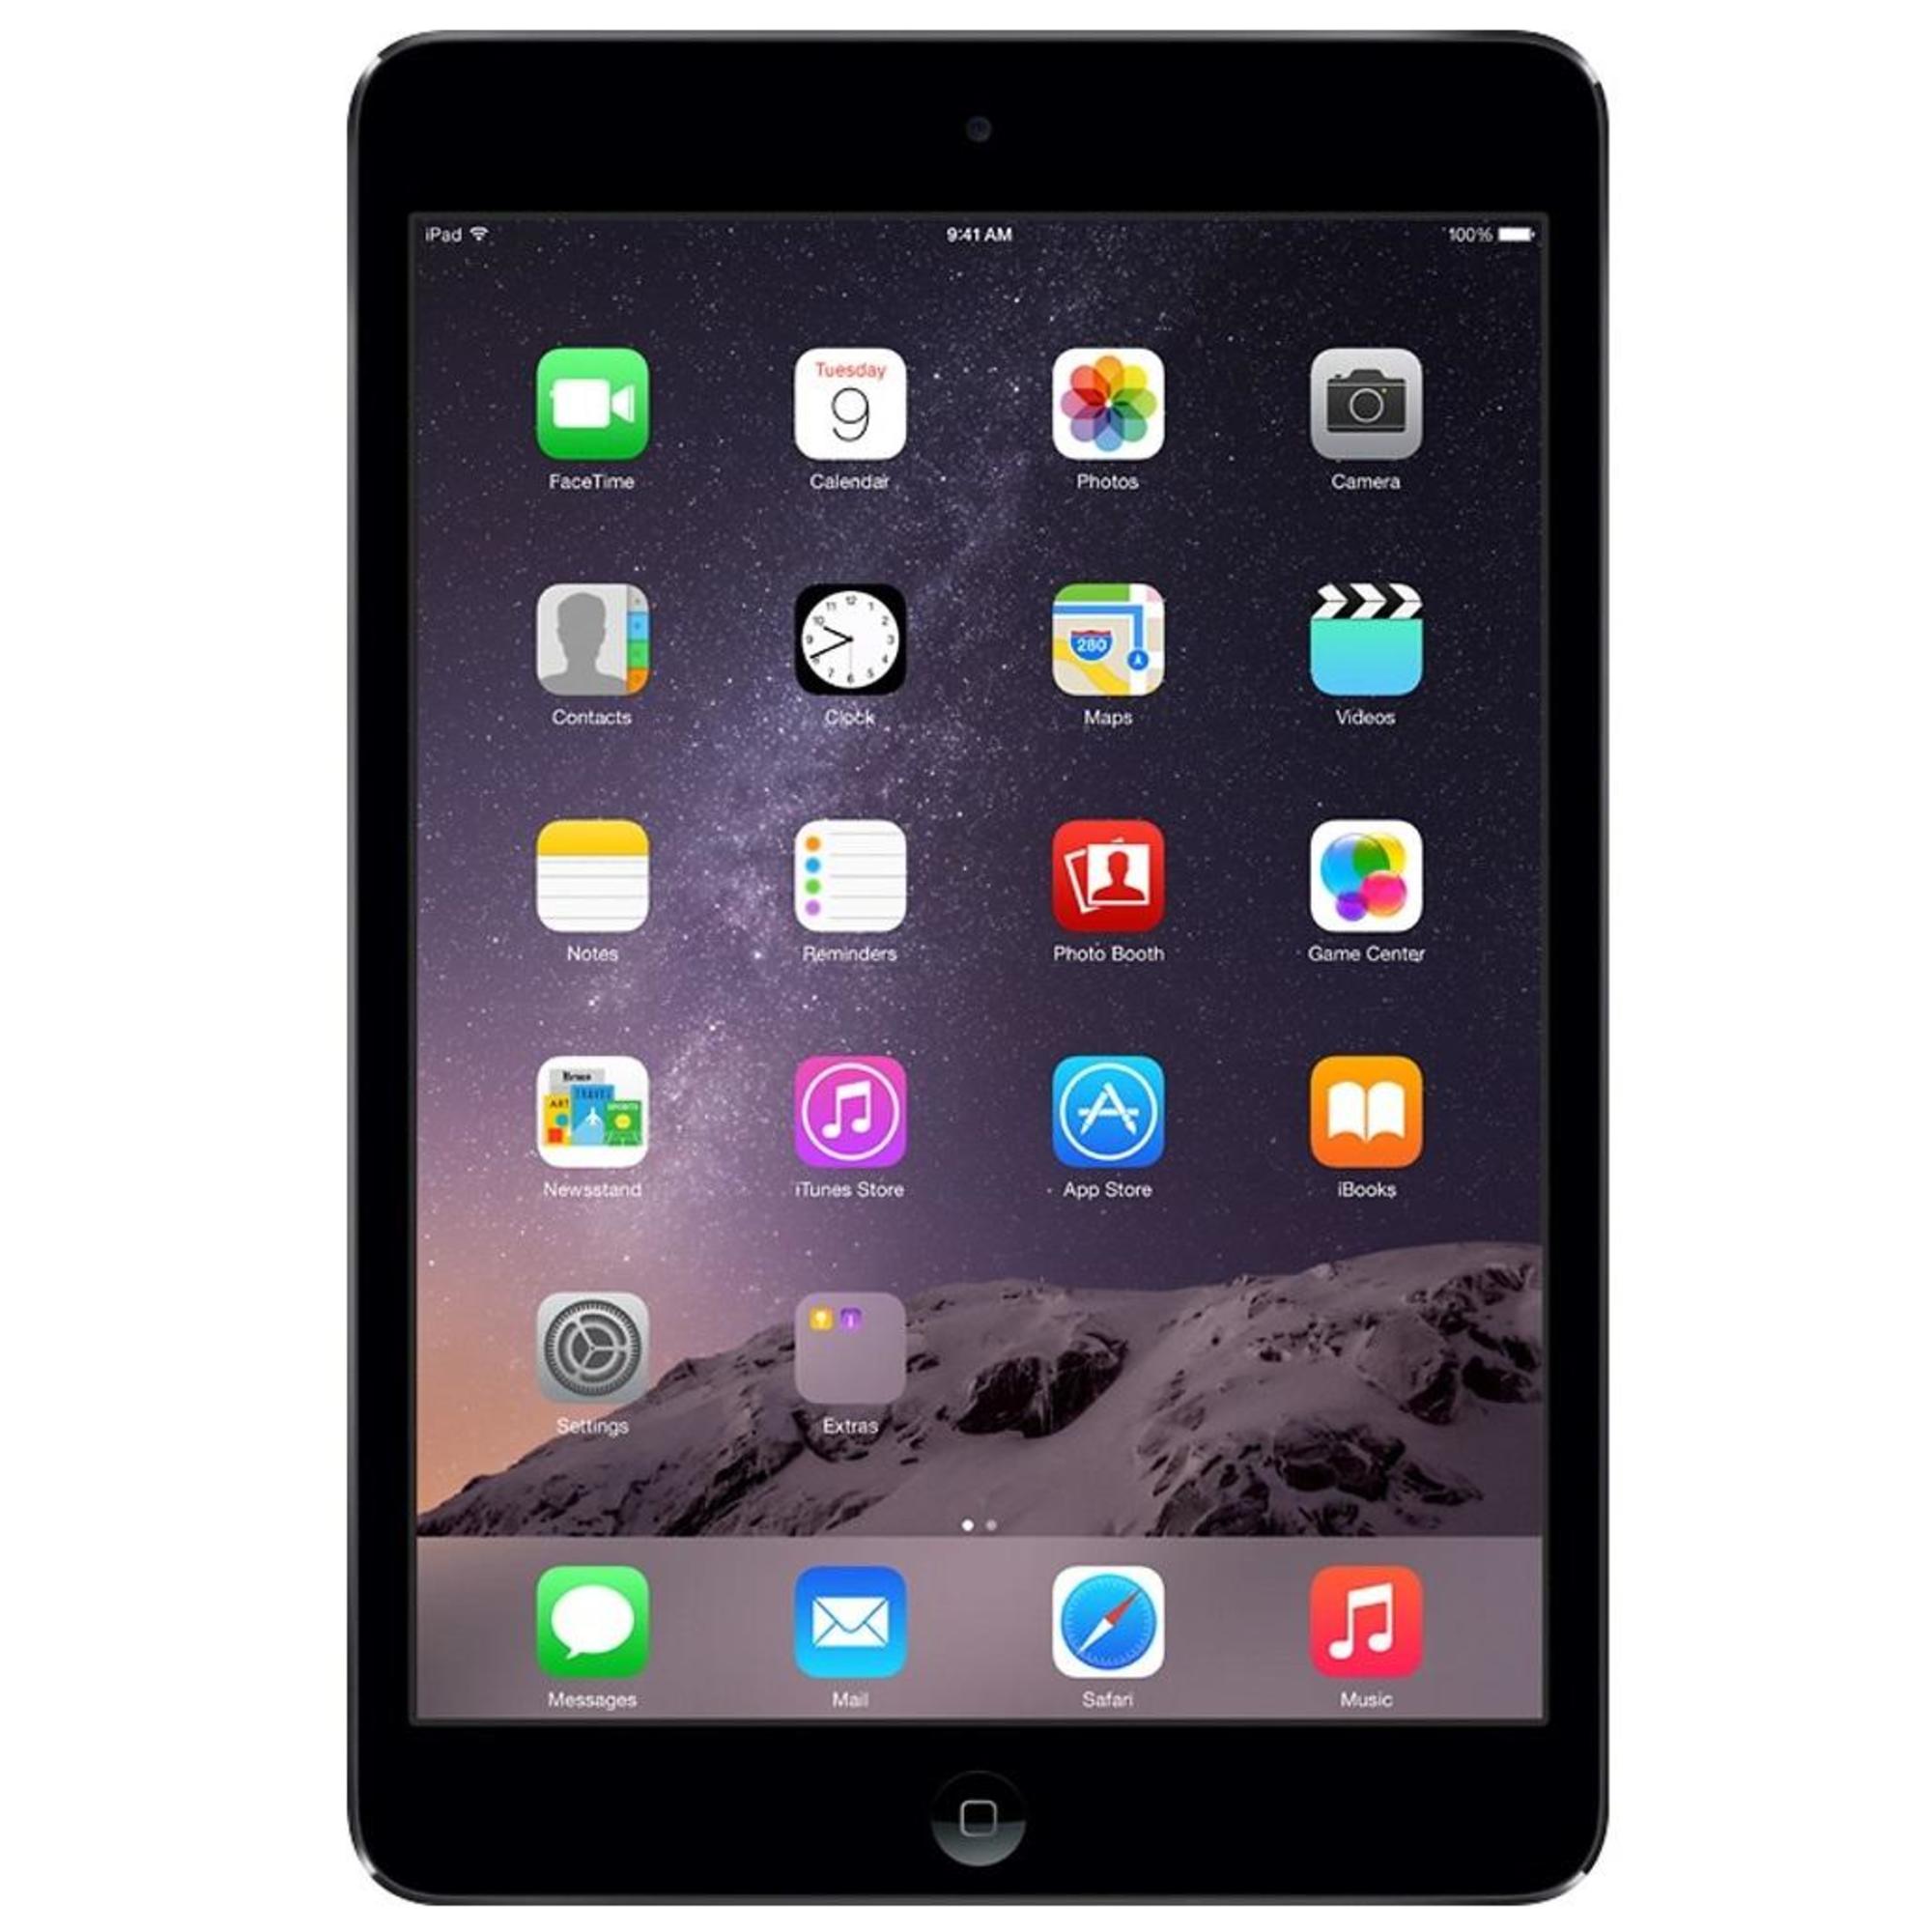 Restored Apple iPad Mini 2 16GB with Retina Display Wi-Fi Tablet - Space Gray (Refurbished) - image 1 of 2